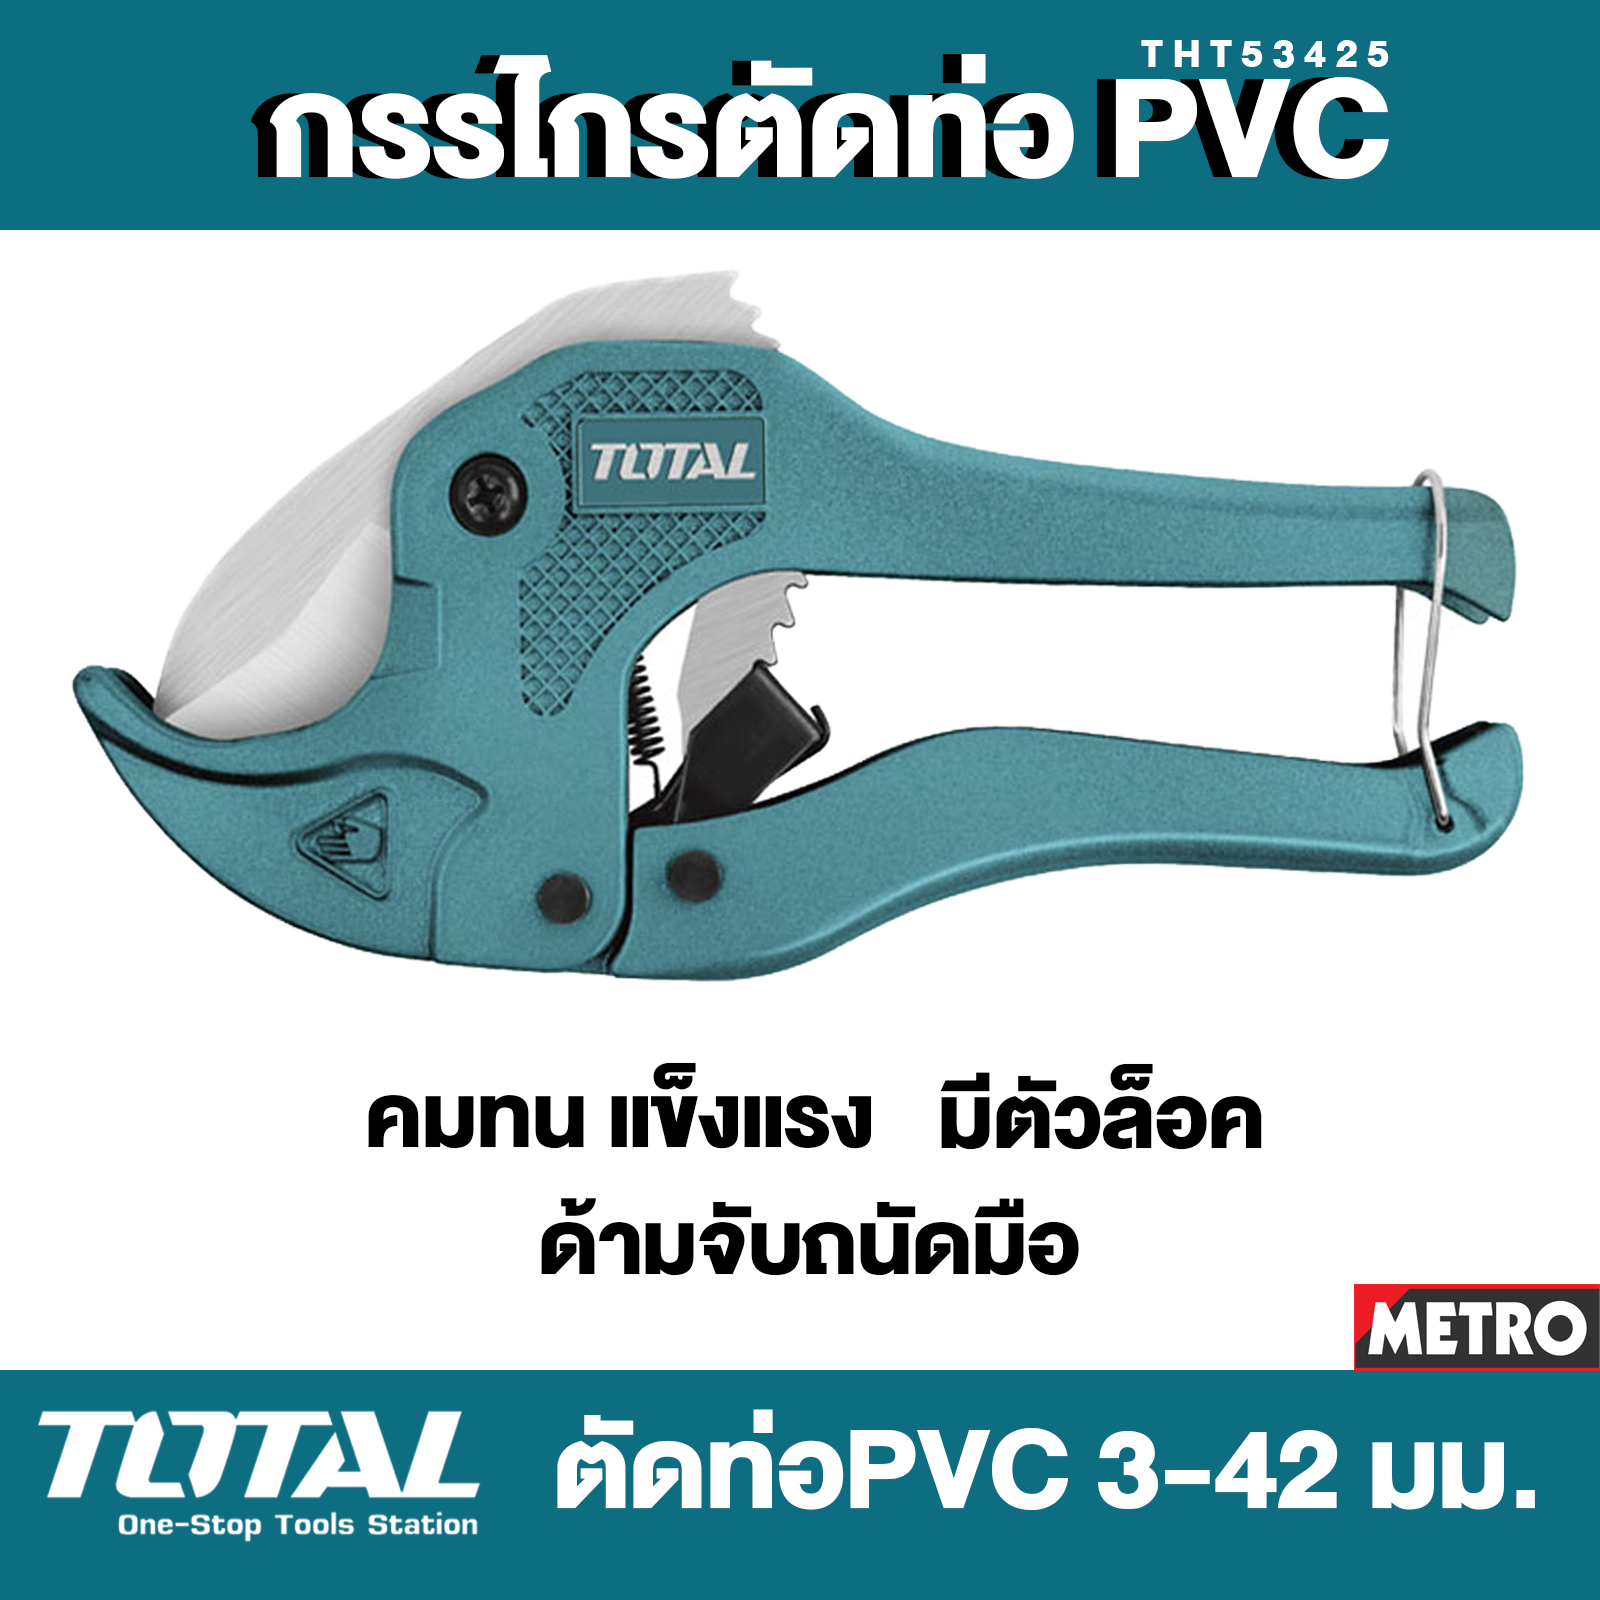 ( MET8 1 ) TOTAL กรรไกรตัดท่อ PVC ขนาด 3-42 มิล รุ่น THT53425 (Pipe Cutter) by METRO